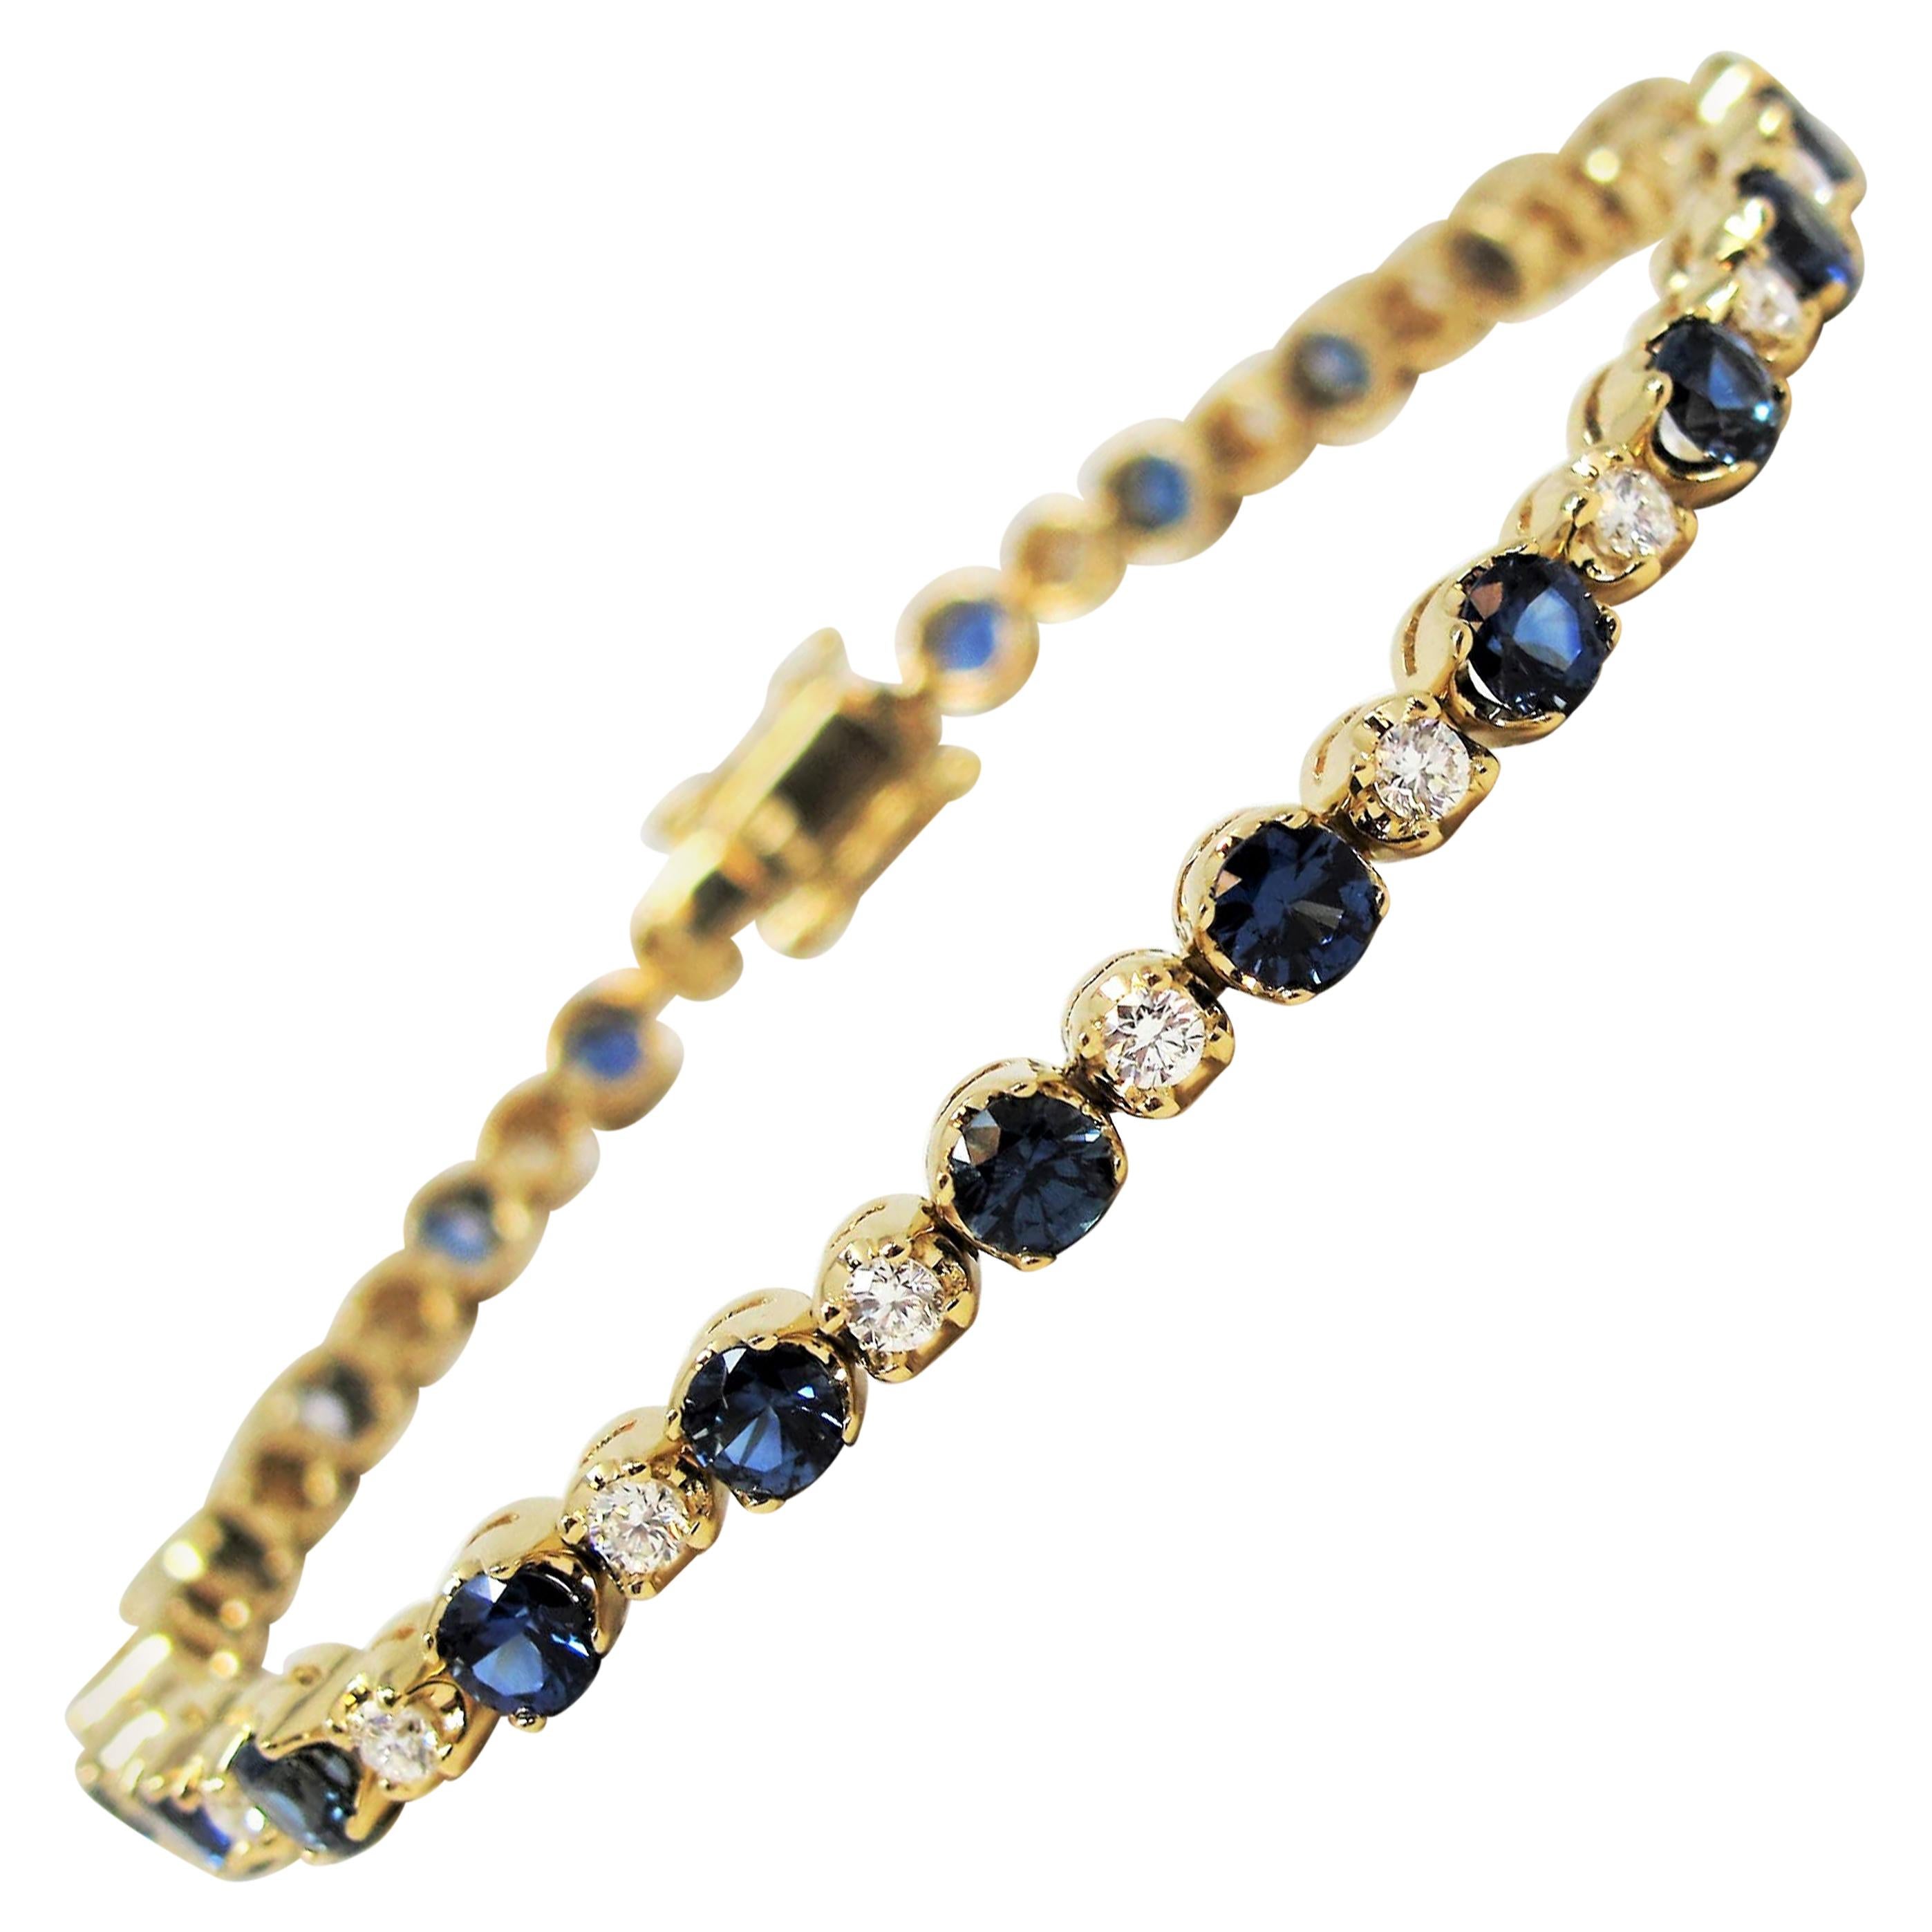 Shefer & Co. - 14K White Gold Diamond and Sapphire Bracelet